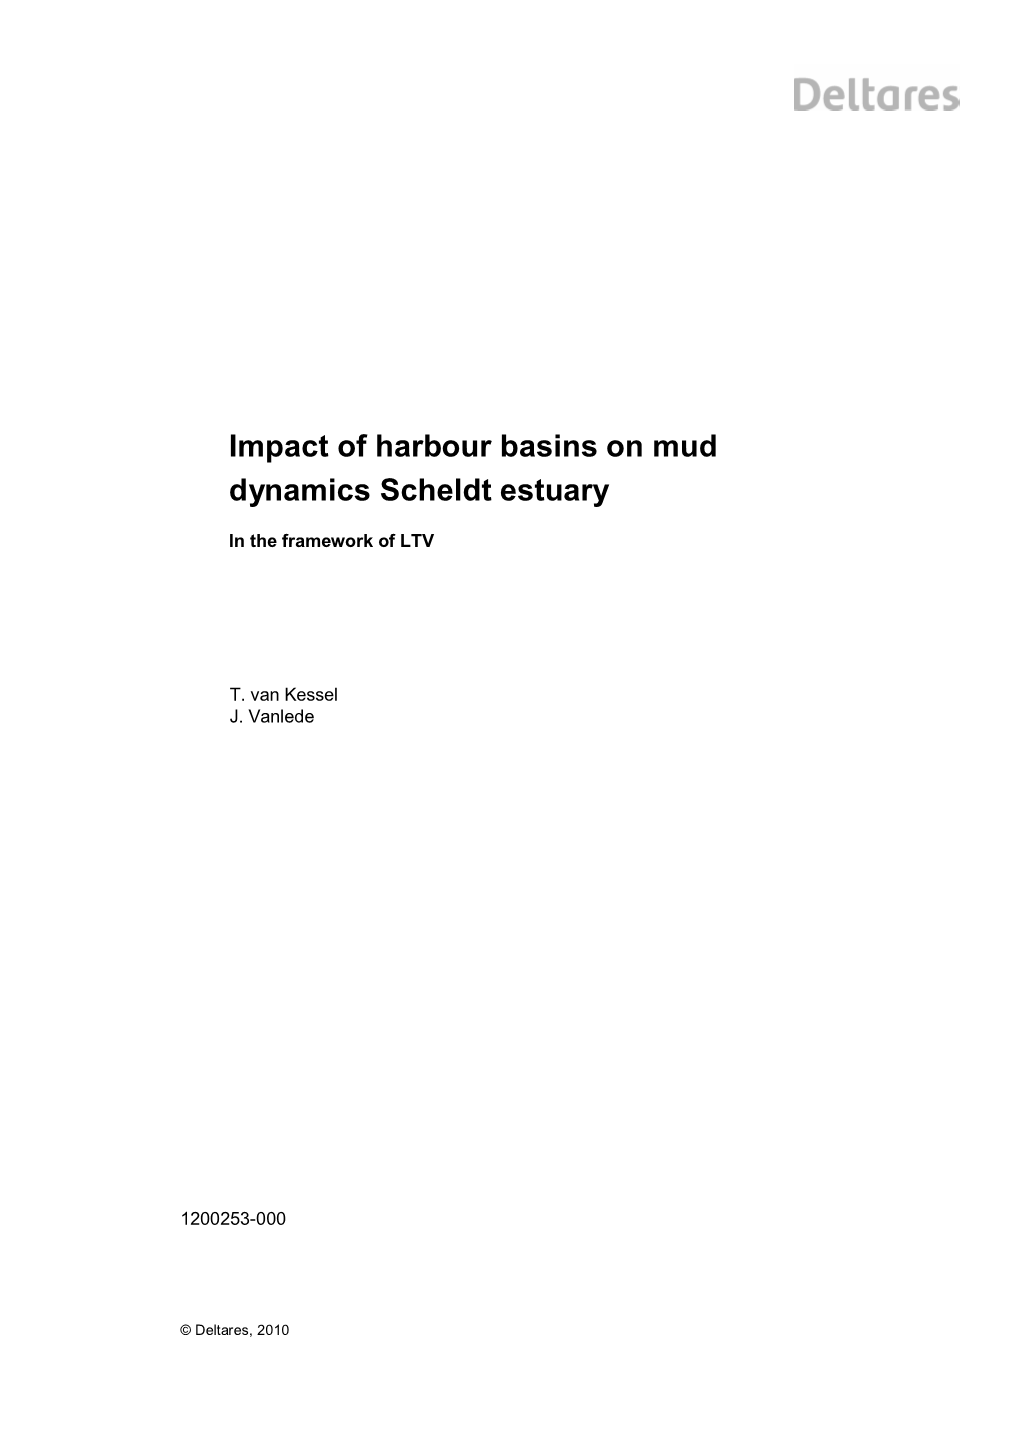 Impact of Harbour Basins on Mud Dynamics Scheldt Estuary